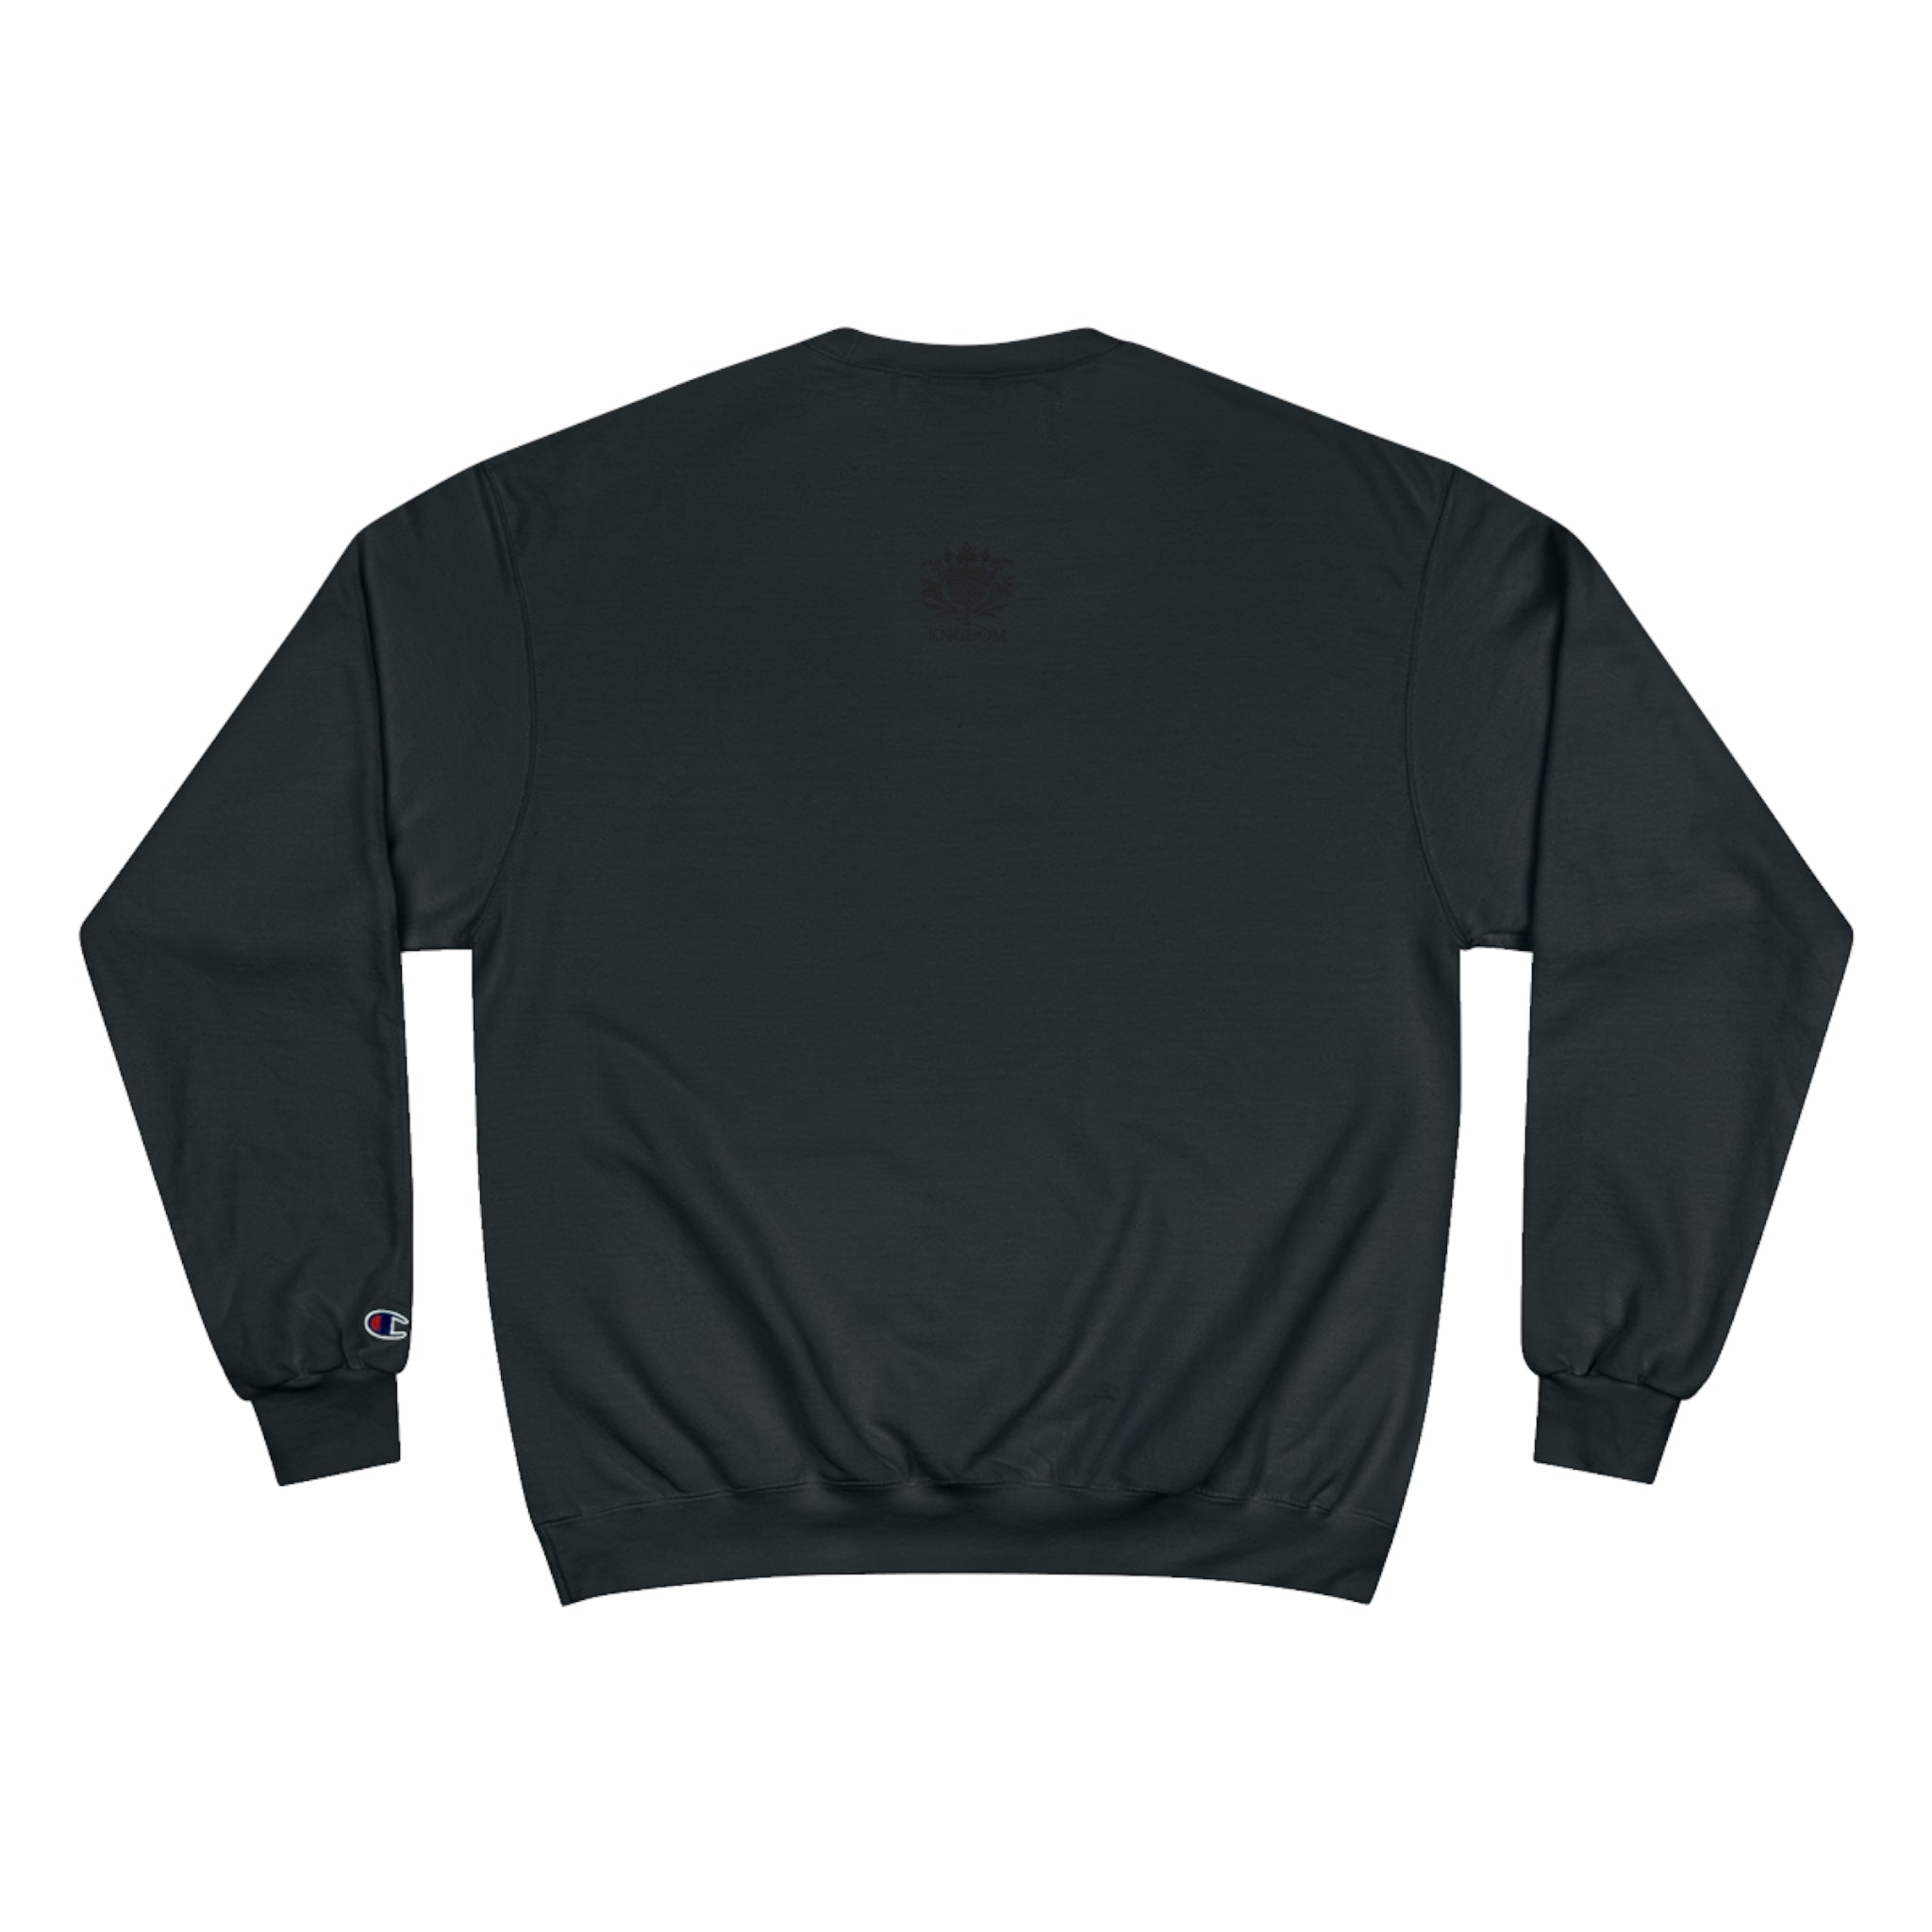 Kngdom &quot;DRIP&quot;- Unisex (DESOLATION) Champion Sweatshirt W/ Back Side Blk Kngdom Logo